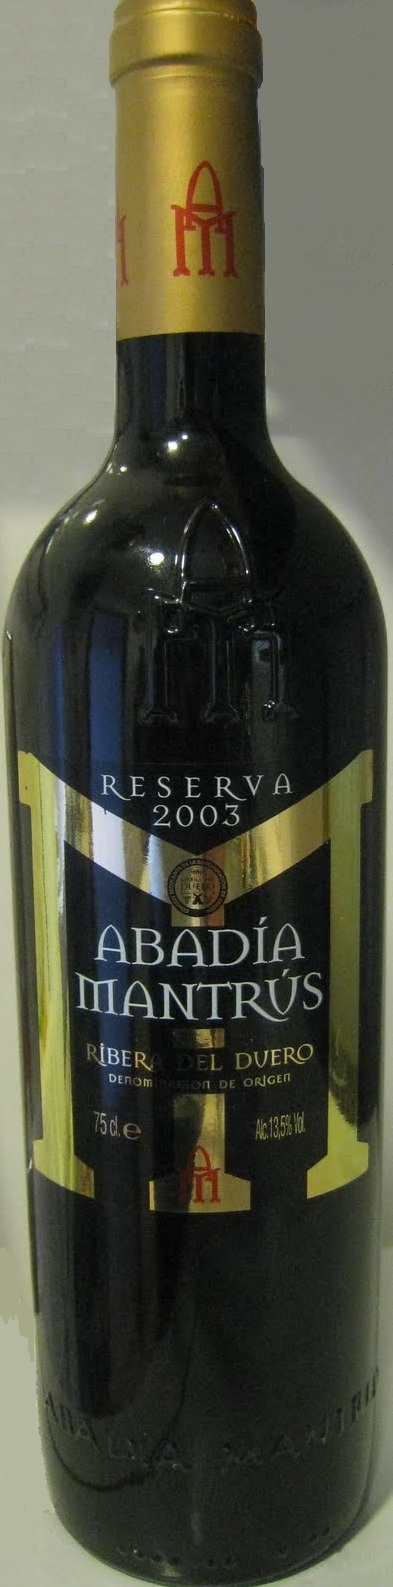 Image of Wine bottle Abadía Mantrus Tinto Reserva